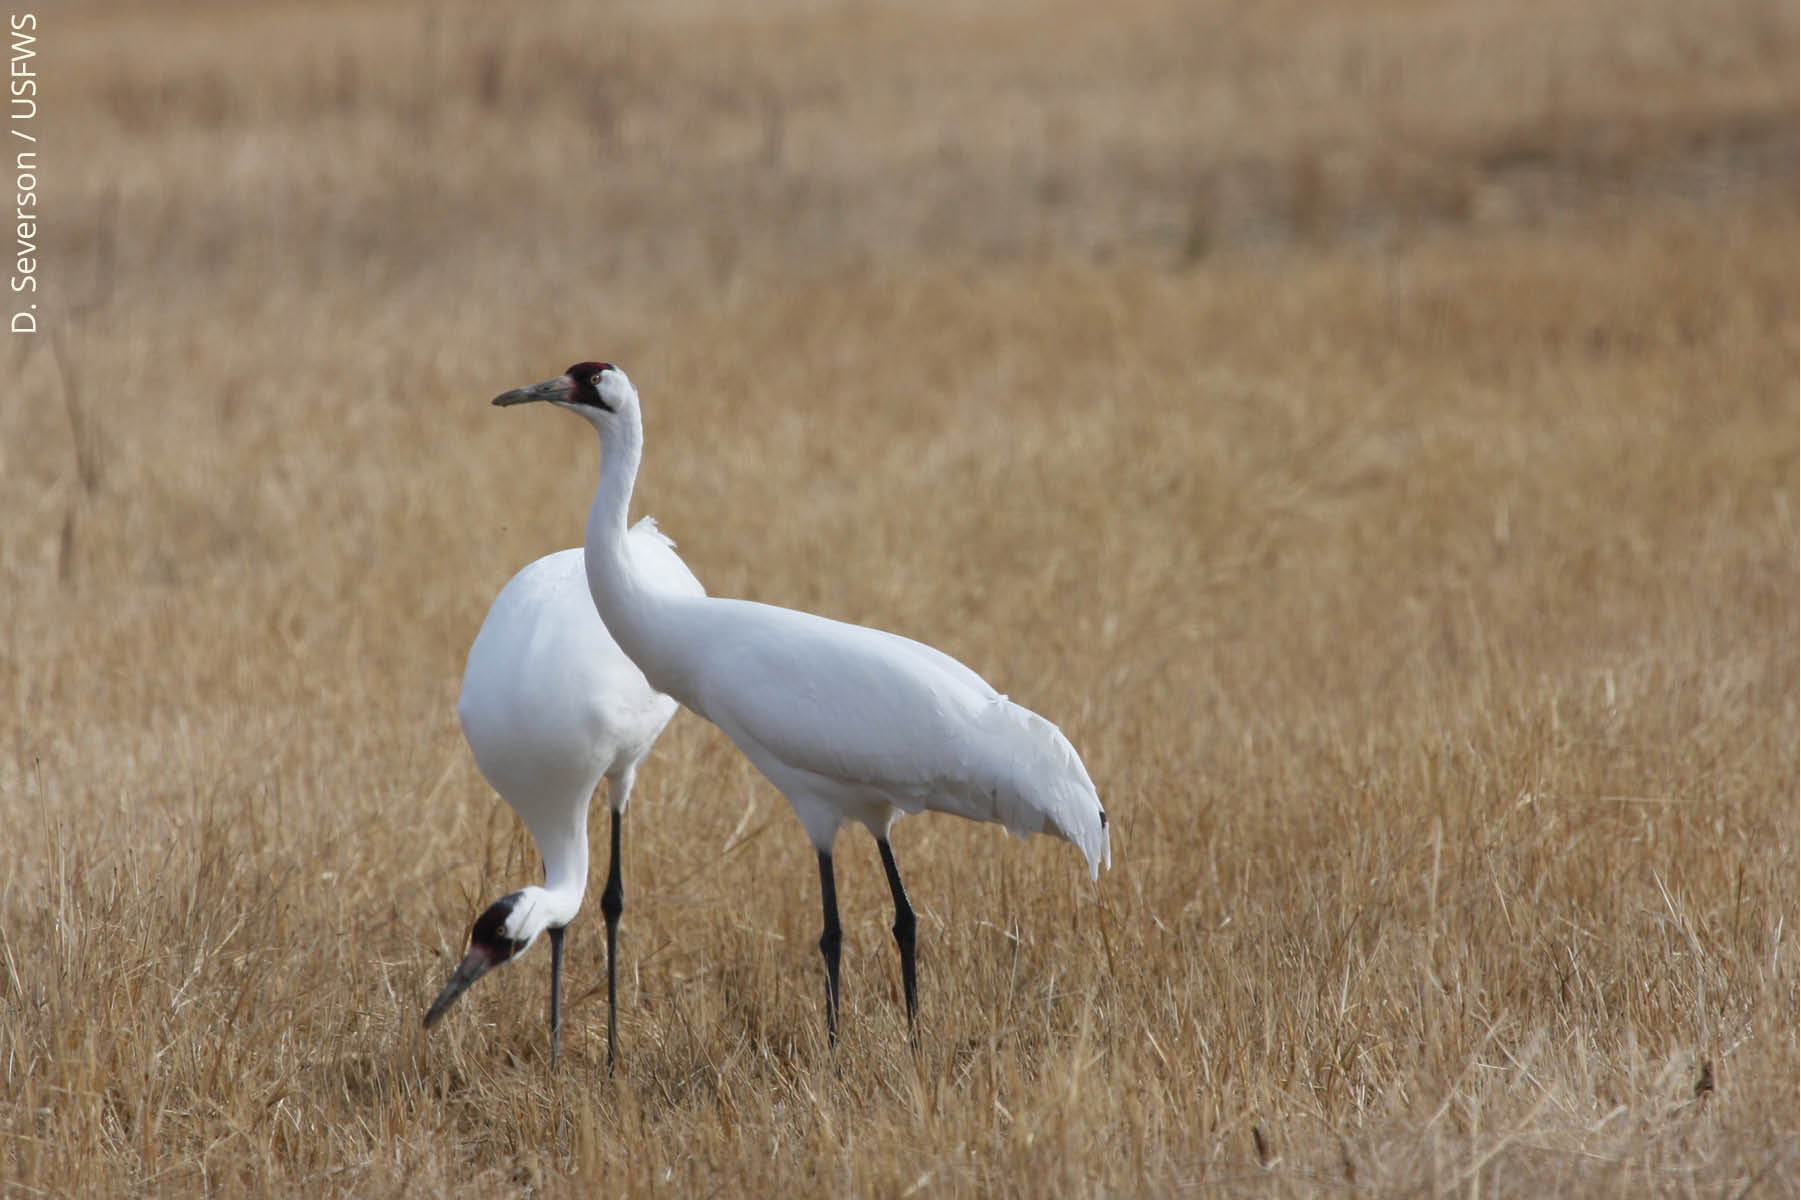 Big Year for Endangered Bird | Oklahoma Department of Wildlife ...